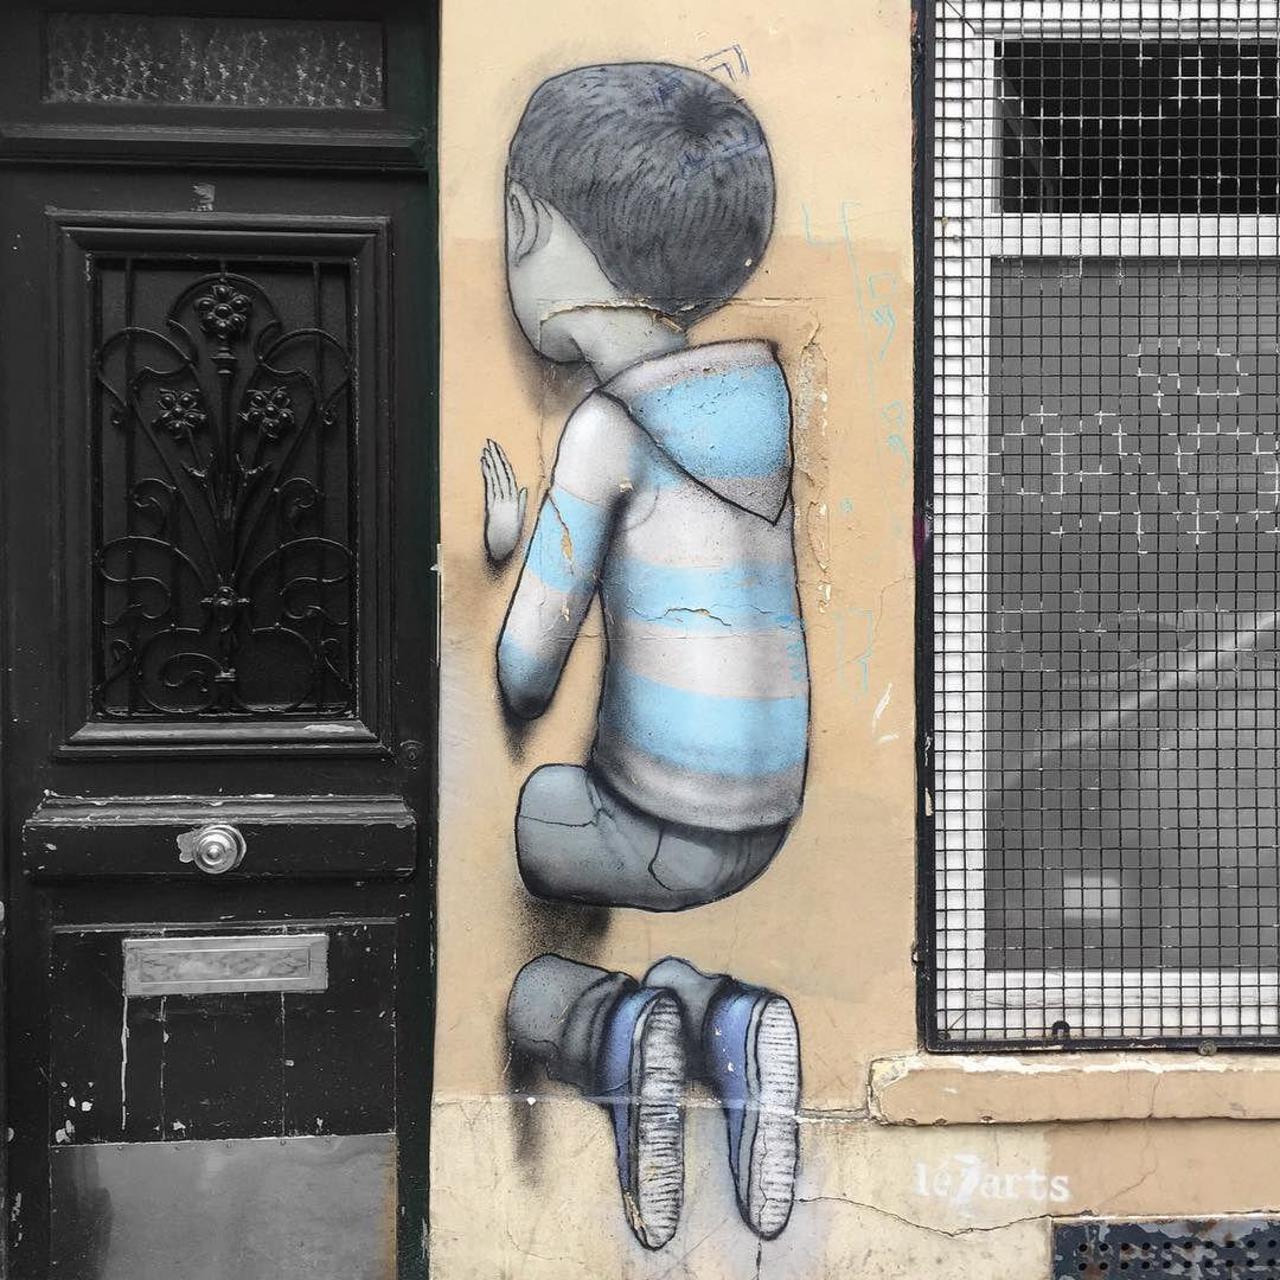 #Paris #graffiti photo by @catscoffeecreativity http://ift.tt/1VTm7Yd #StreetArt http://t.co/taxxzDZknj